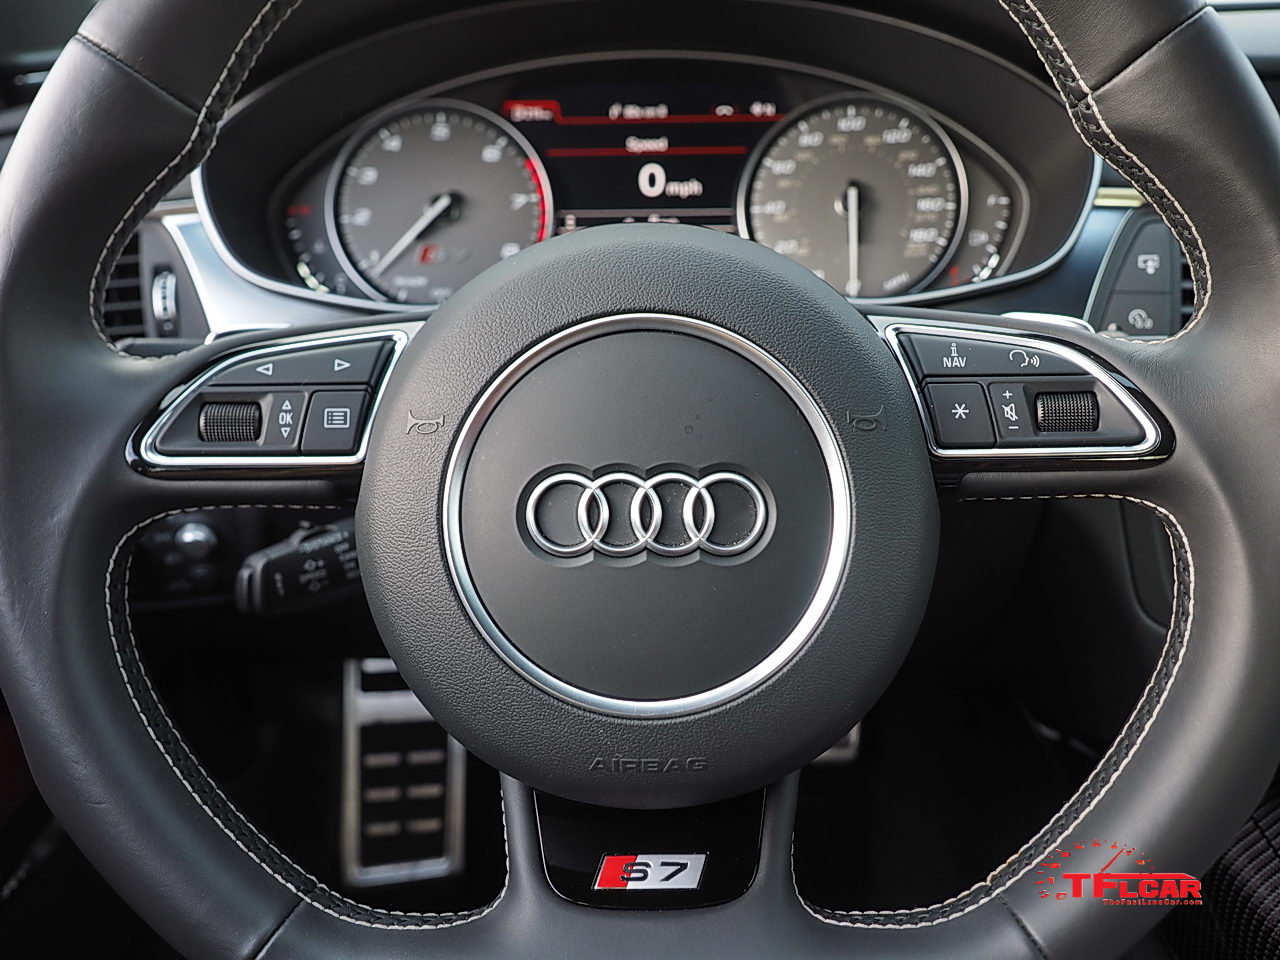 2016 Audi S7 steering wheel controls